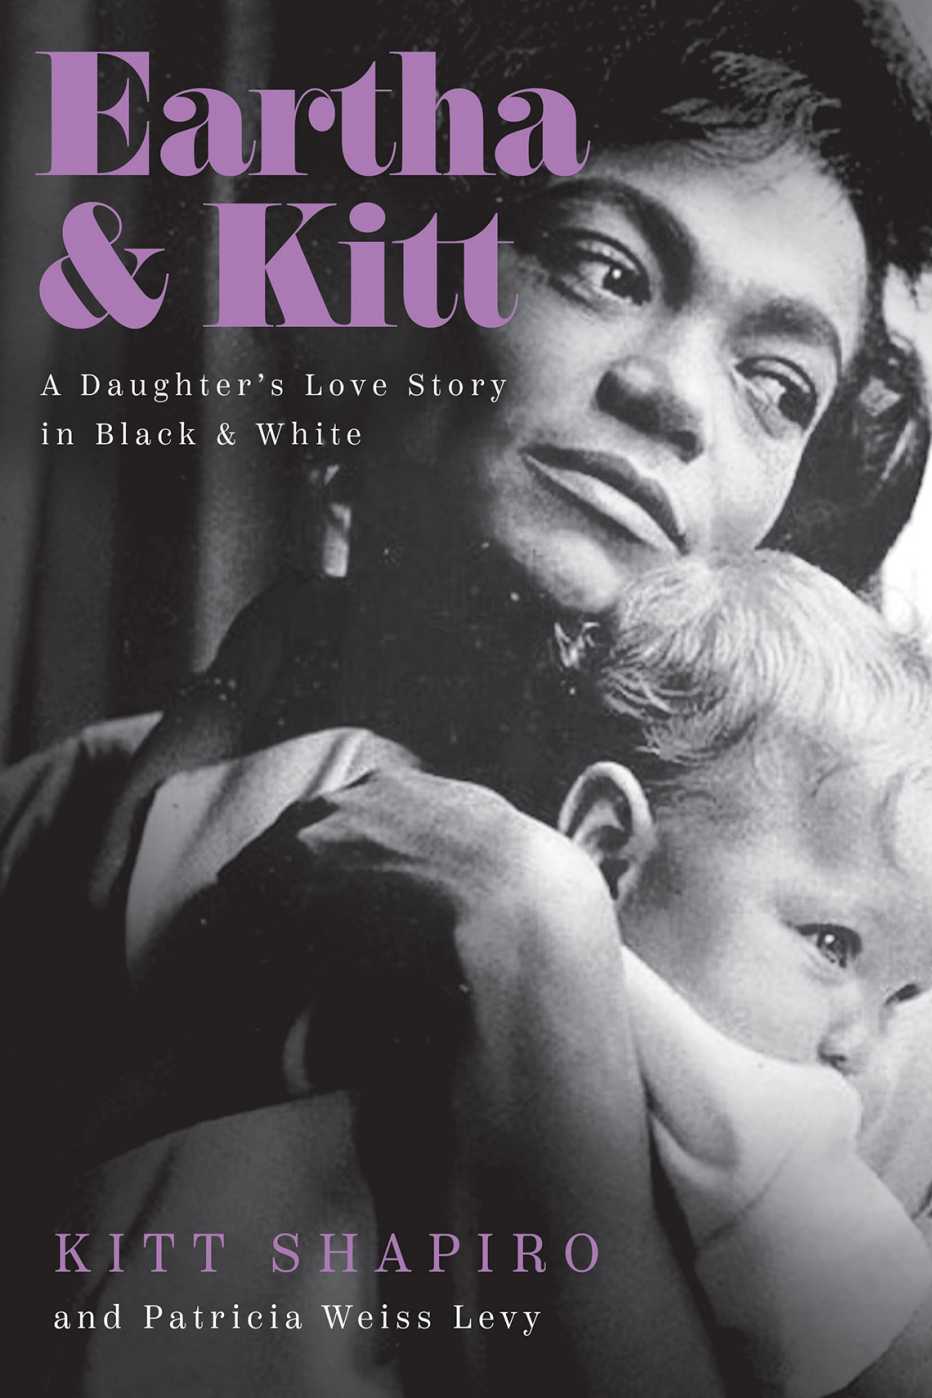 La portada del libro de las memorias de Kitt Shapiro, "Eartha and Kitt A Daughter's Love Story in Black and White".